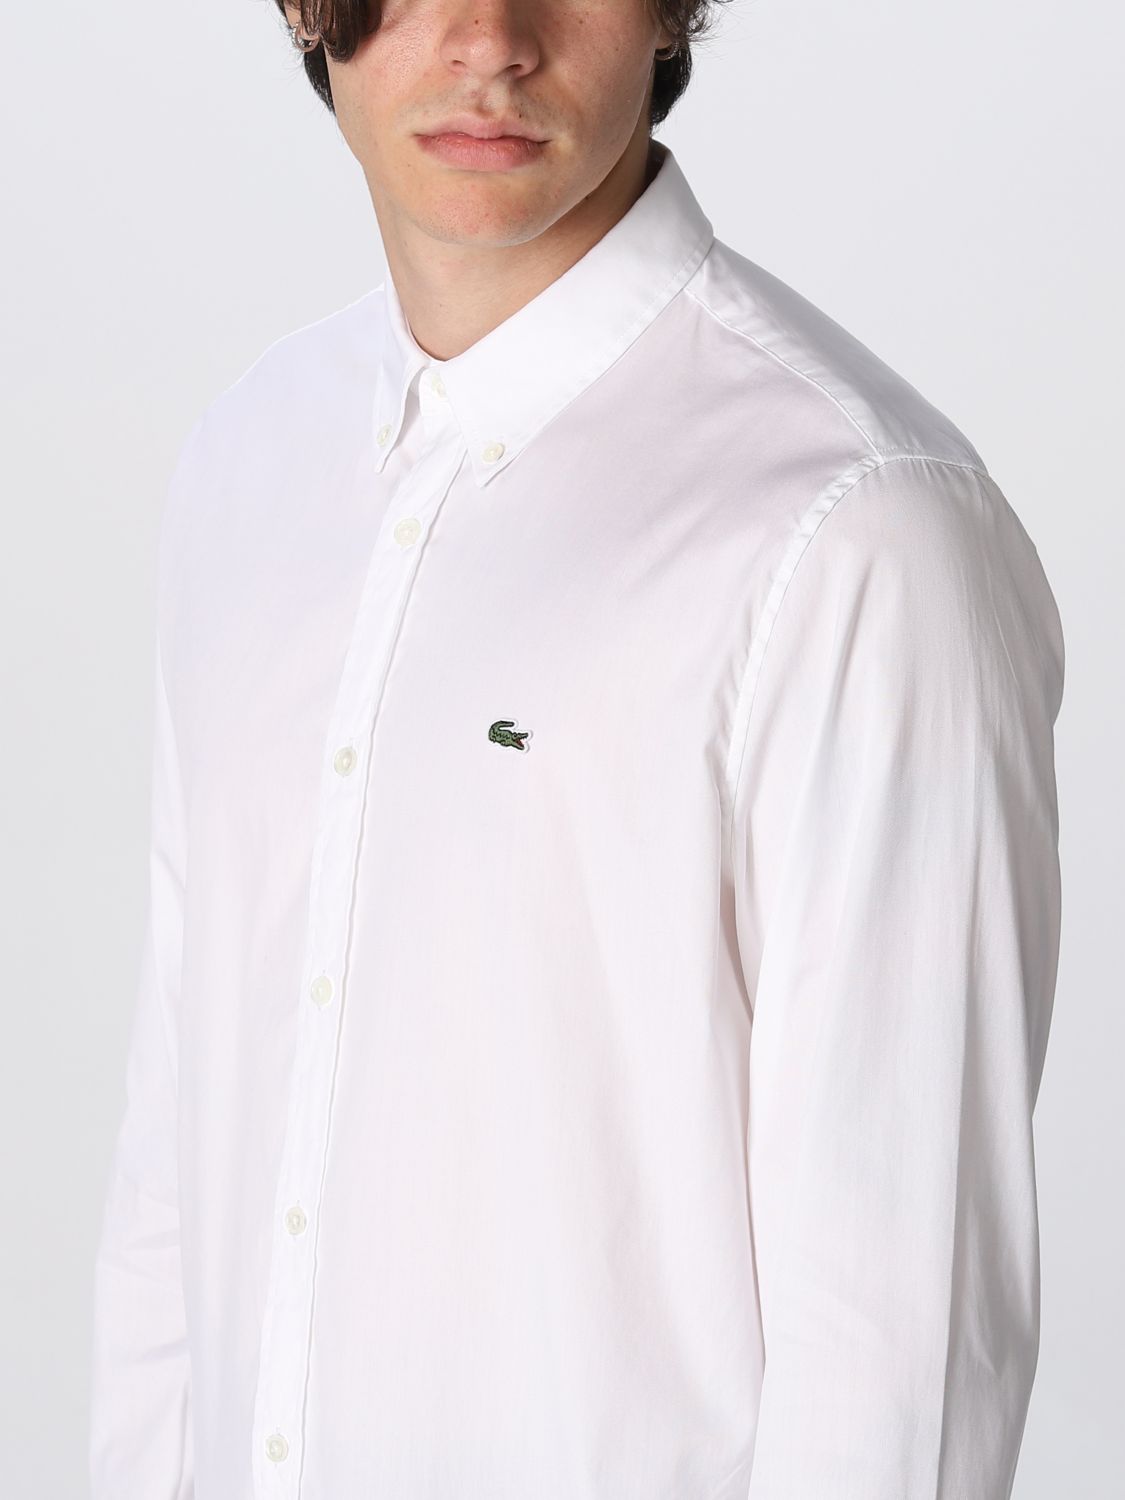 Republiek De kerk enthousiast LACOSTE: shirt for man - White | Lacoste shirt CH2933 online on GIGLIO.COM